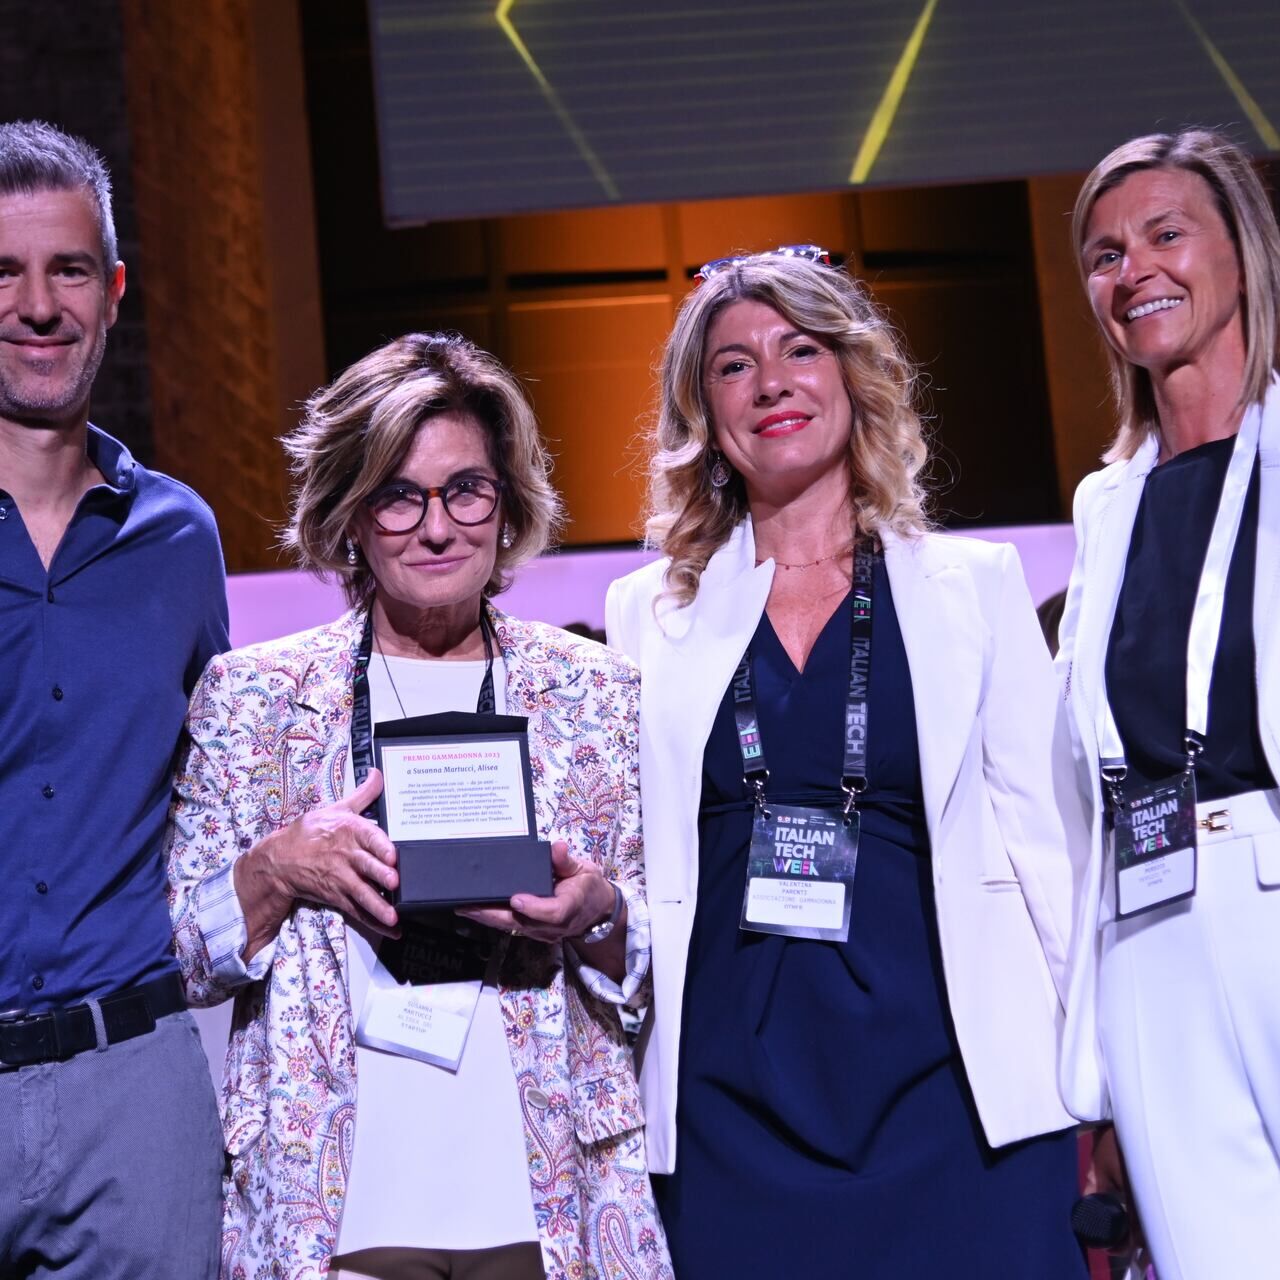 Penghargaan GammaDonna: Marco dan Valentina Parenti, Susanna Martucci dan Claudia Persico